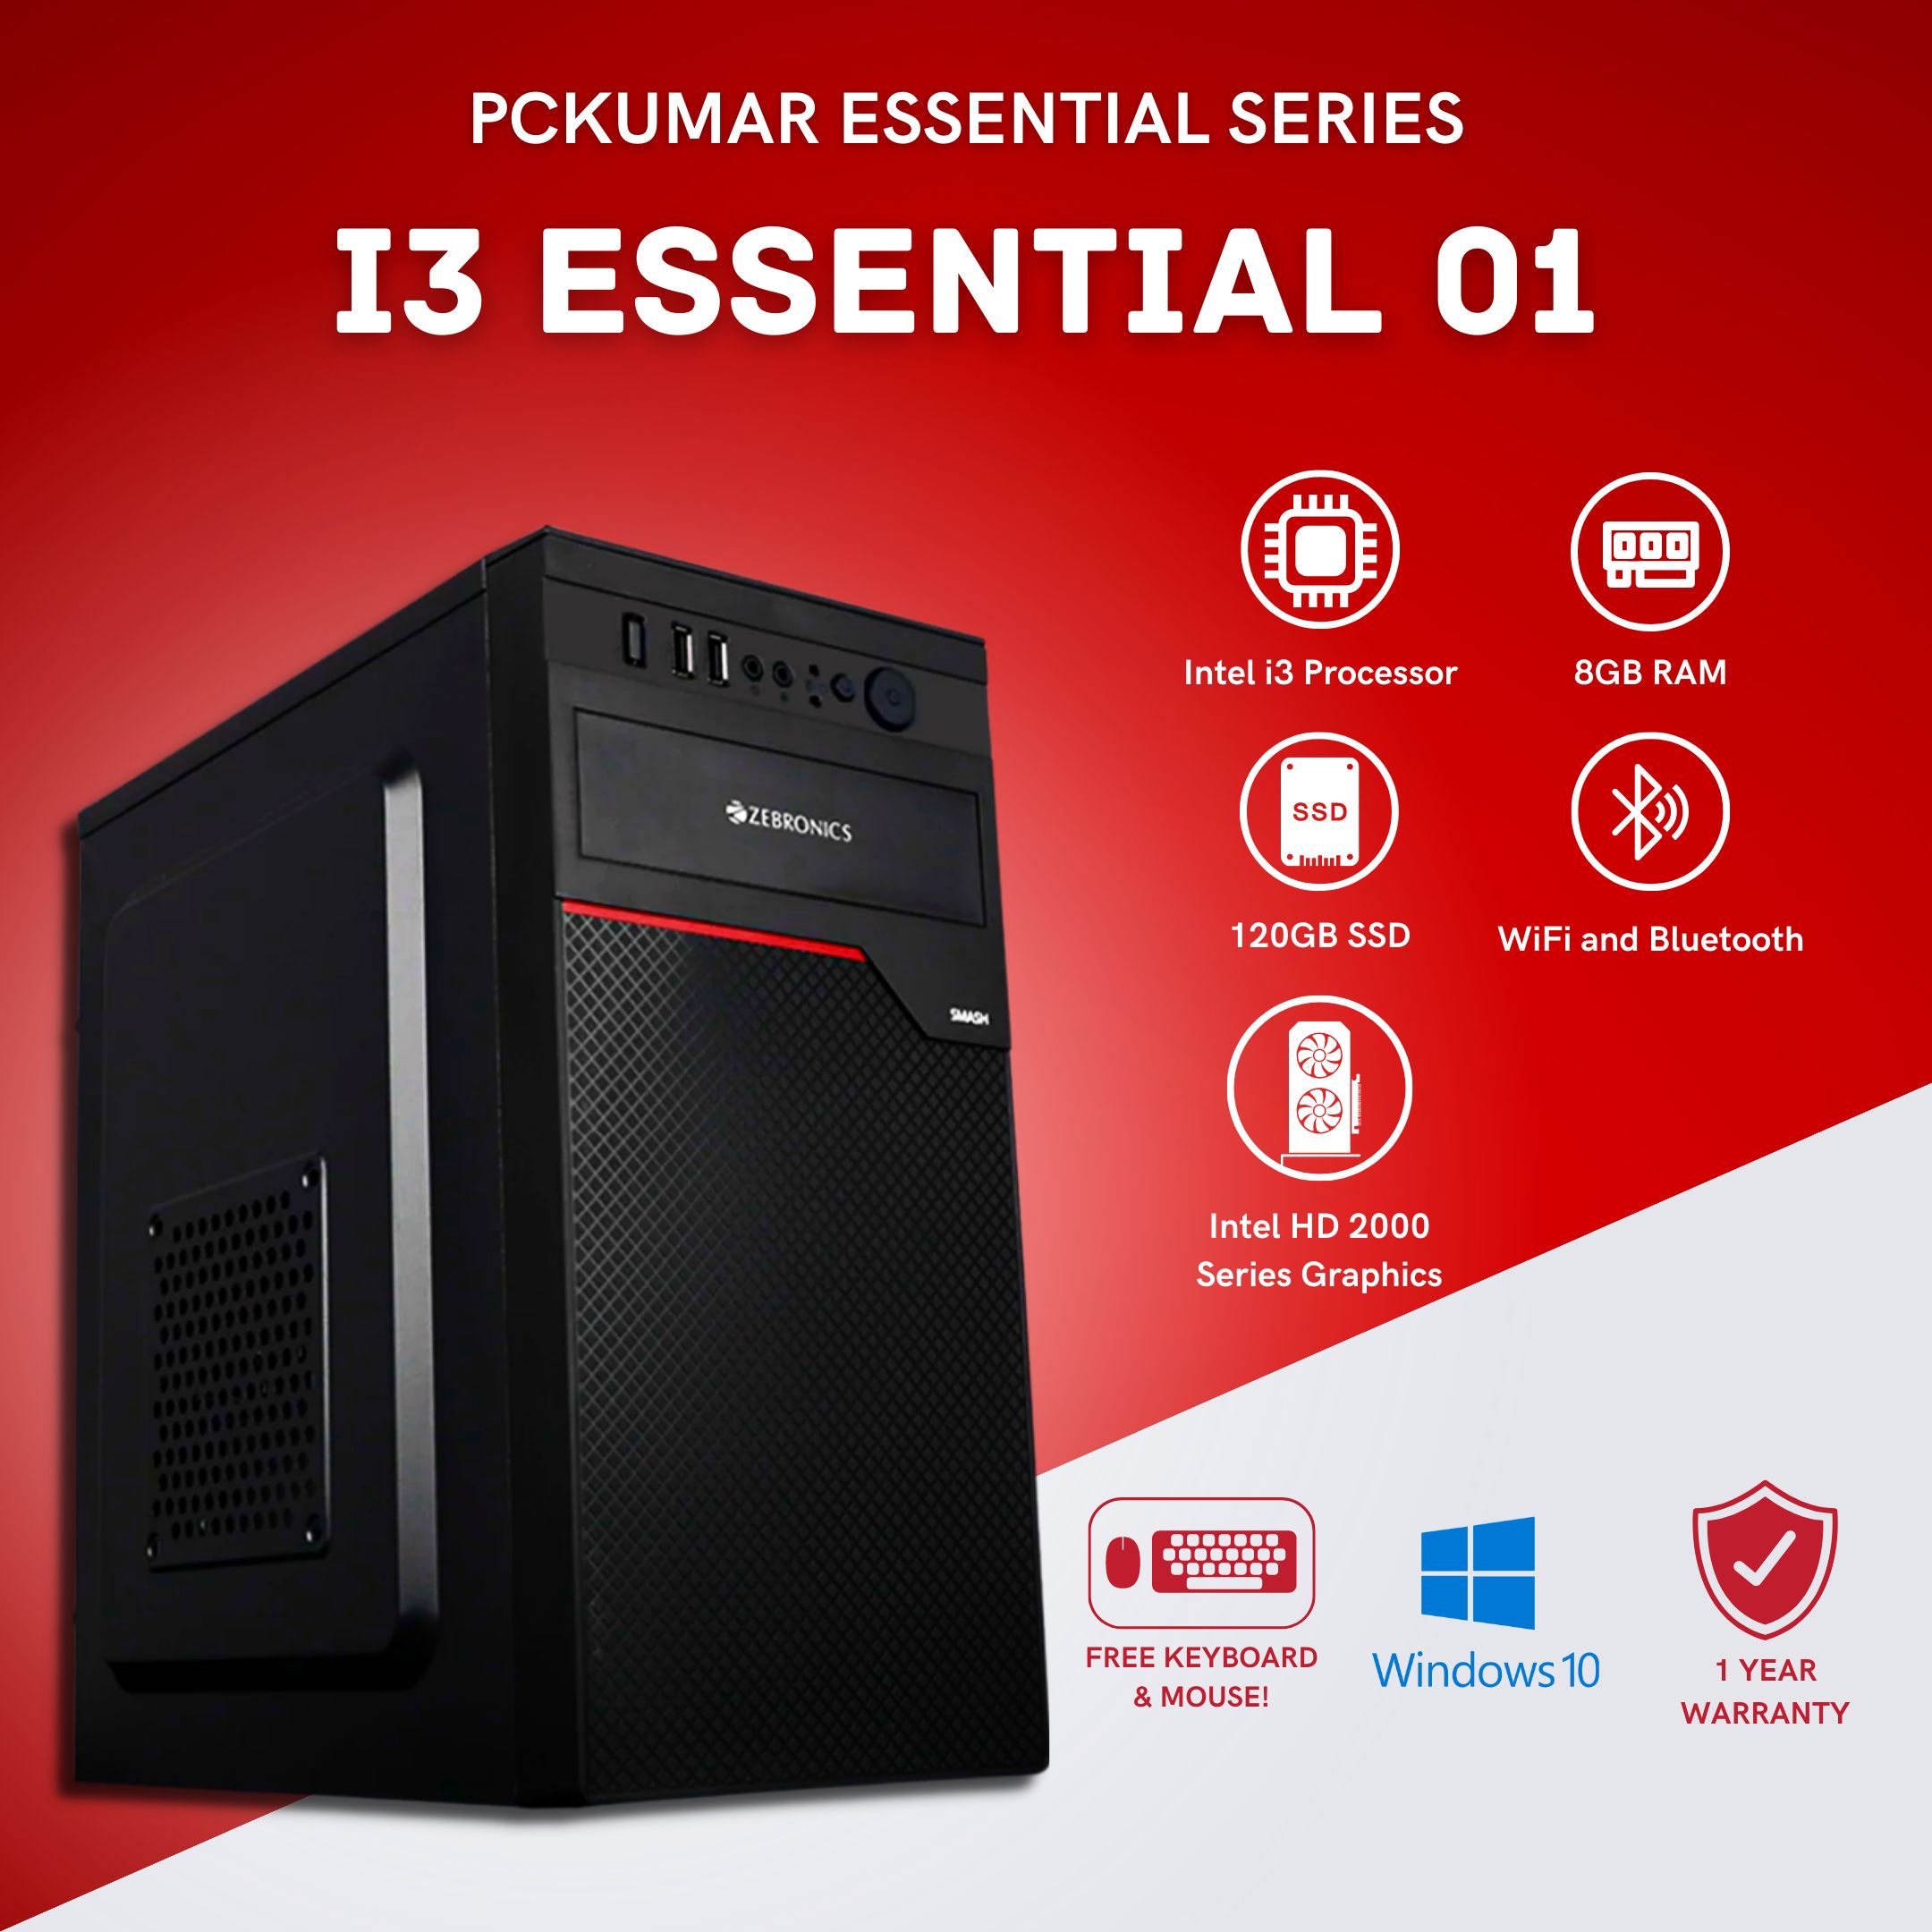 PC Kumar Essential 01 Intel i3 Basic PC for 10499/-